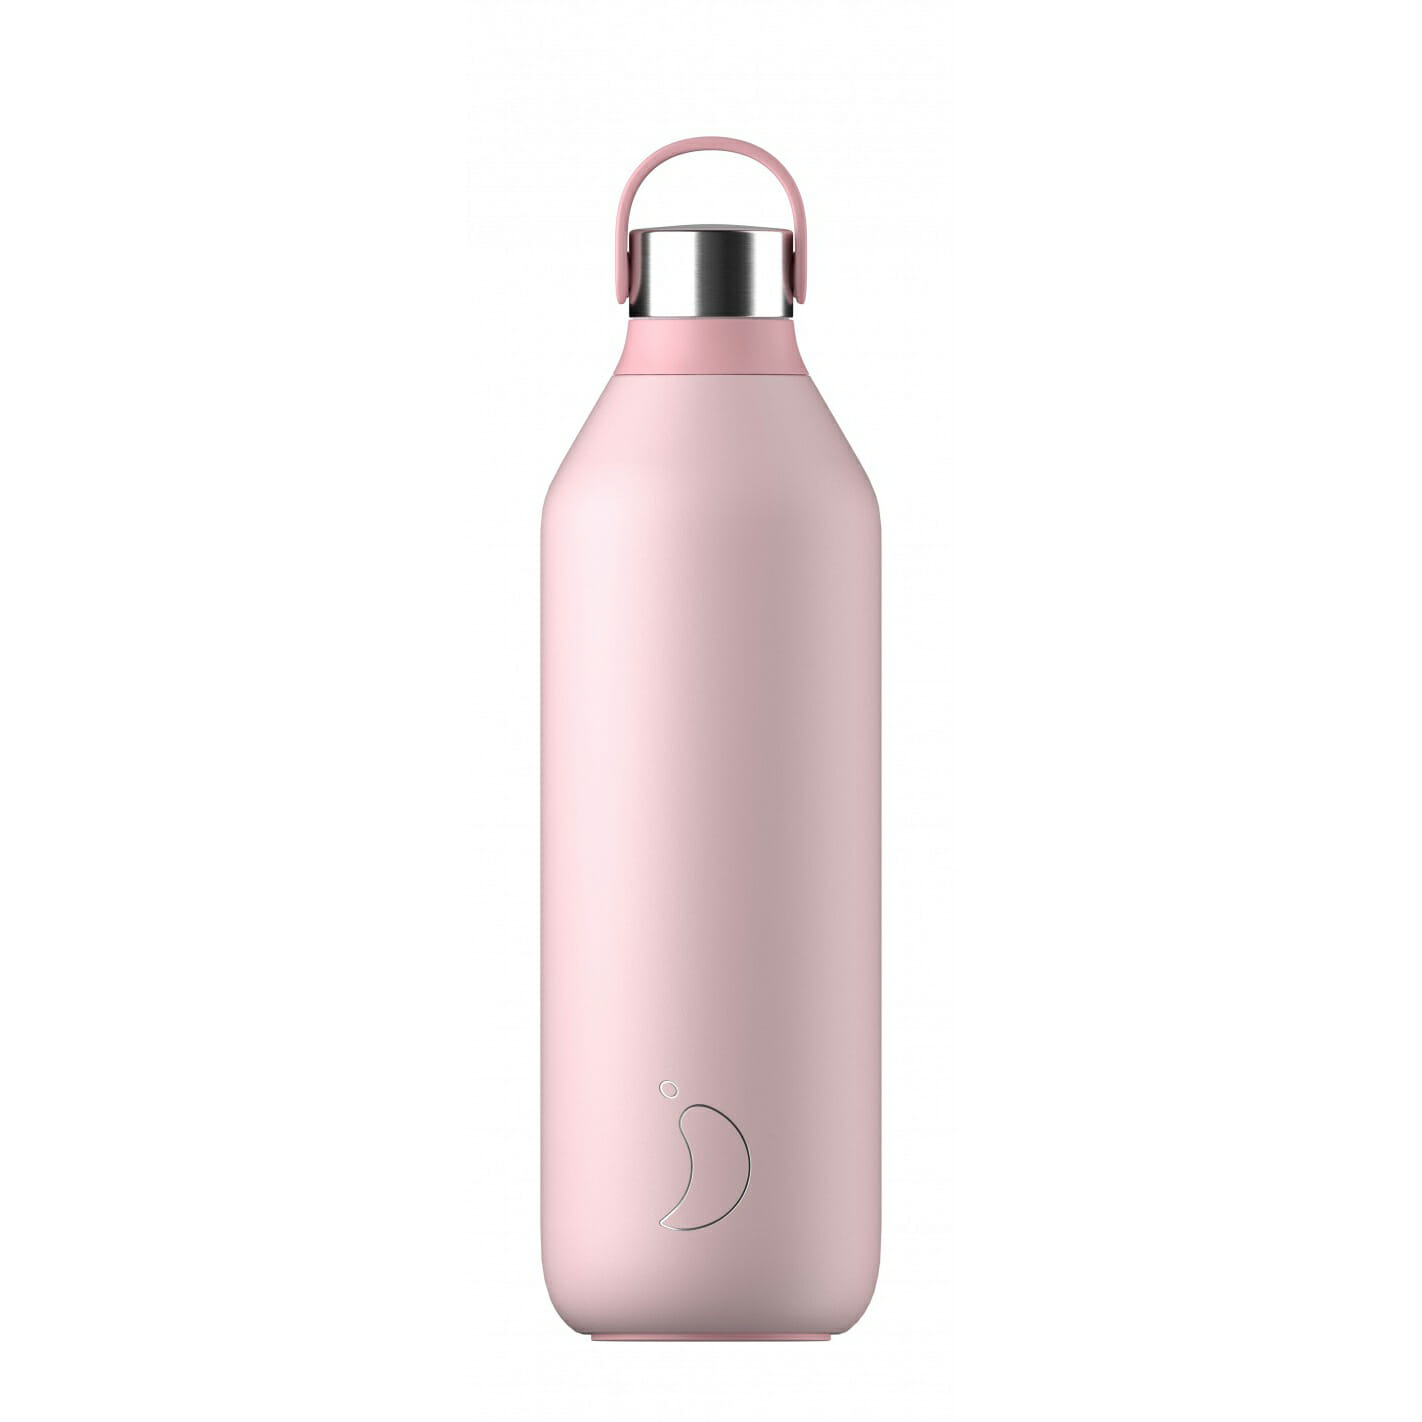 series-2-bottle-1l-blush-pink.jpg